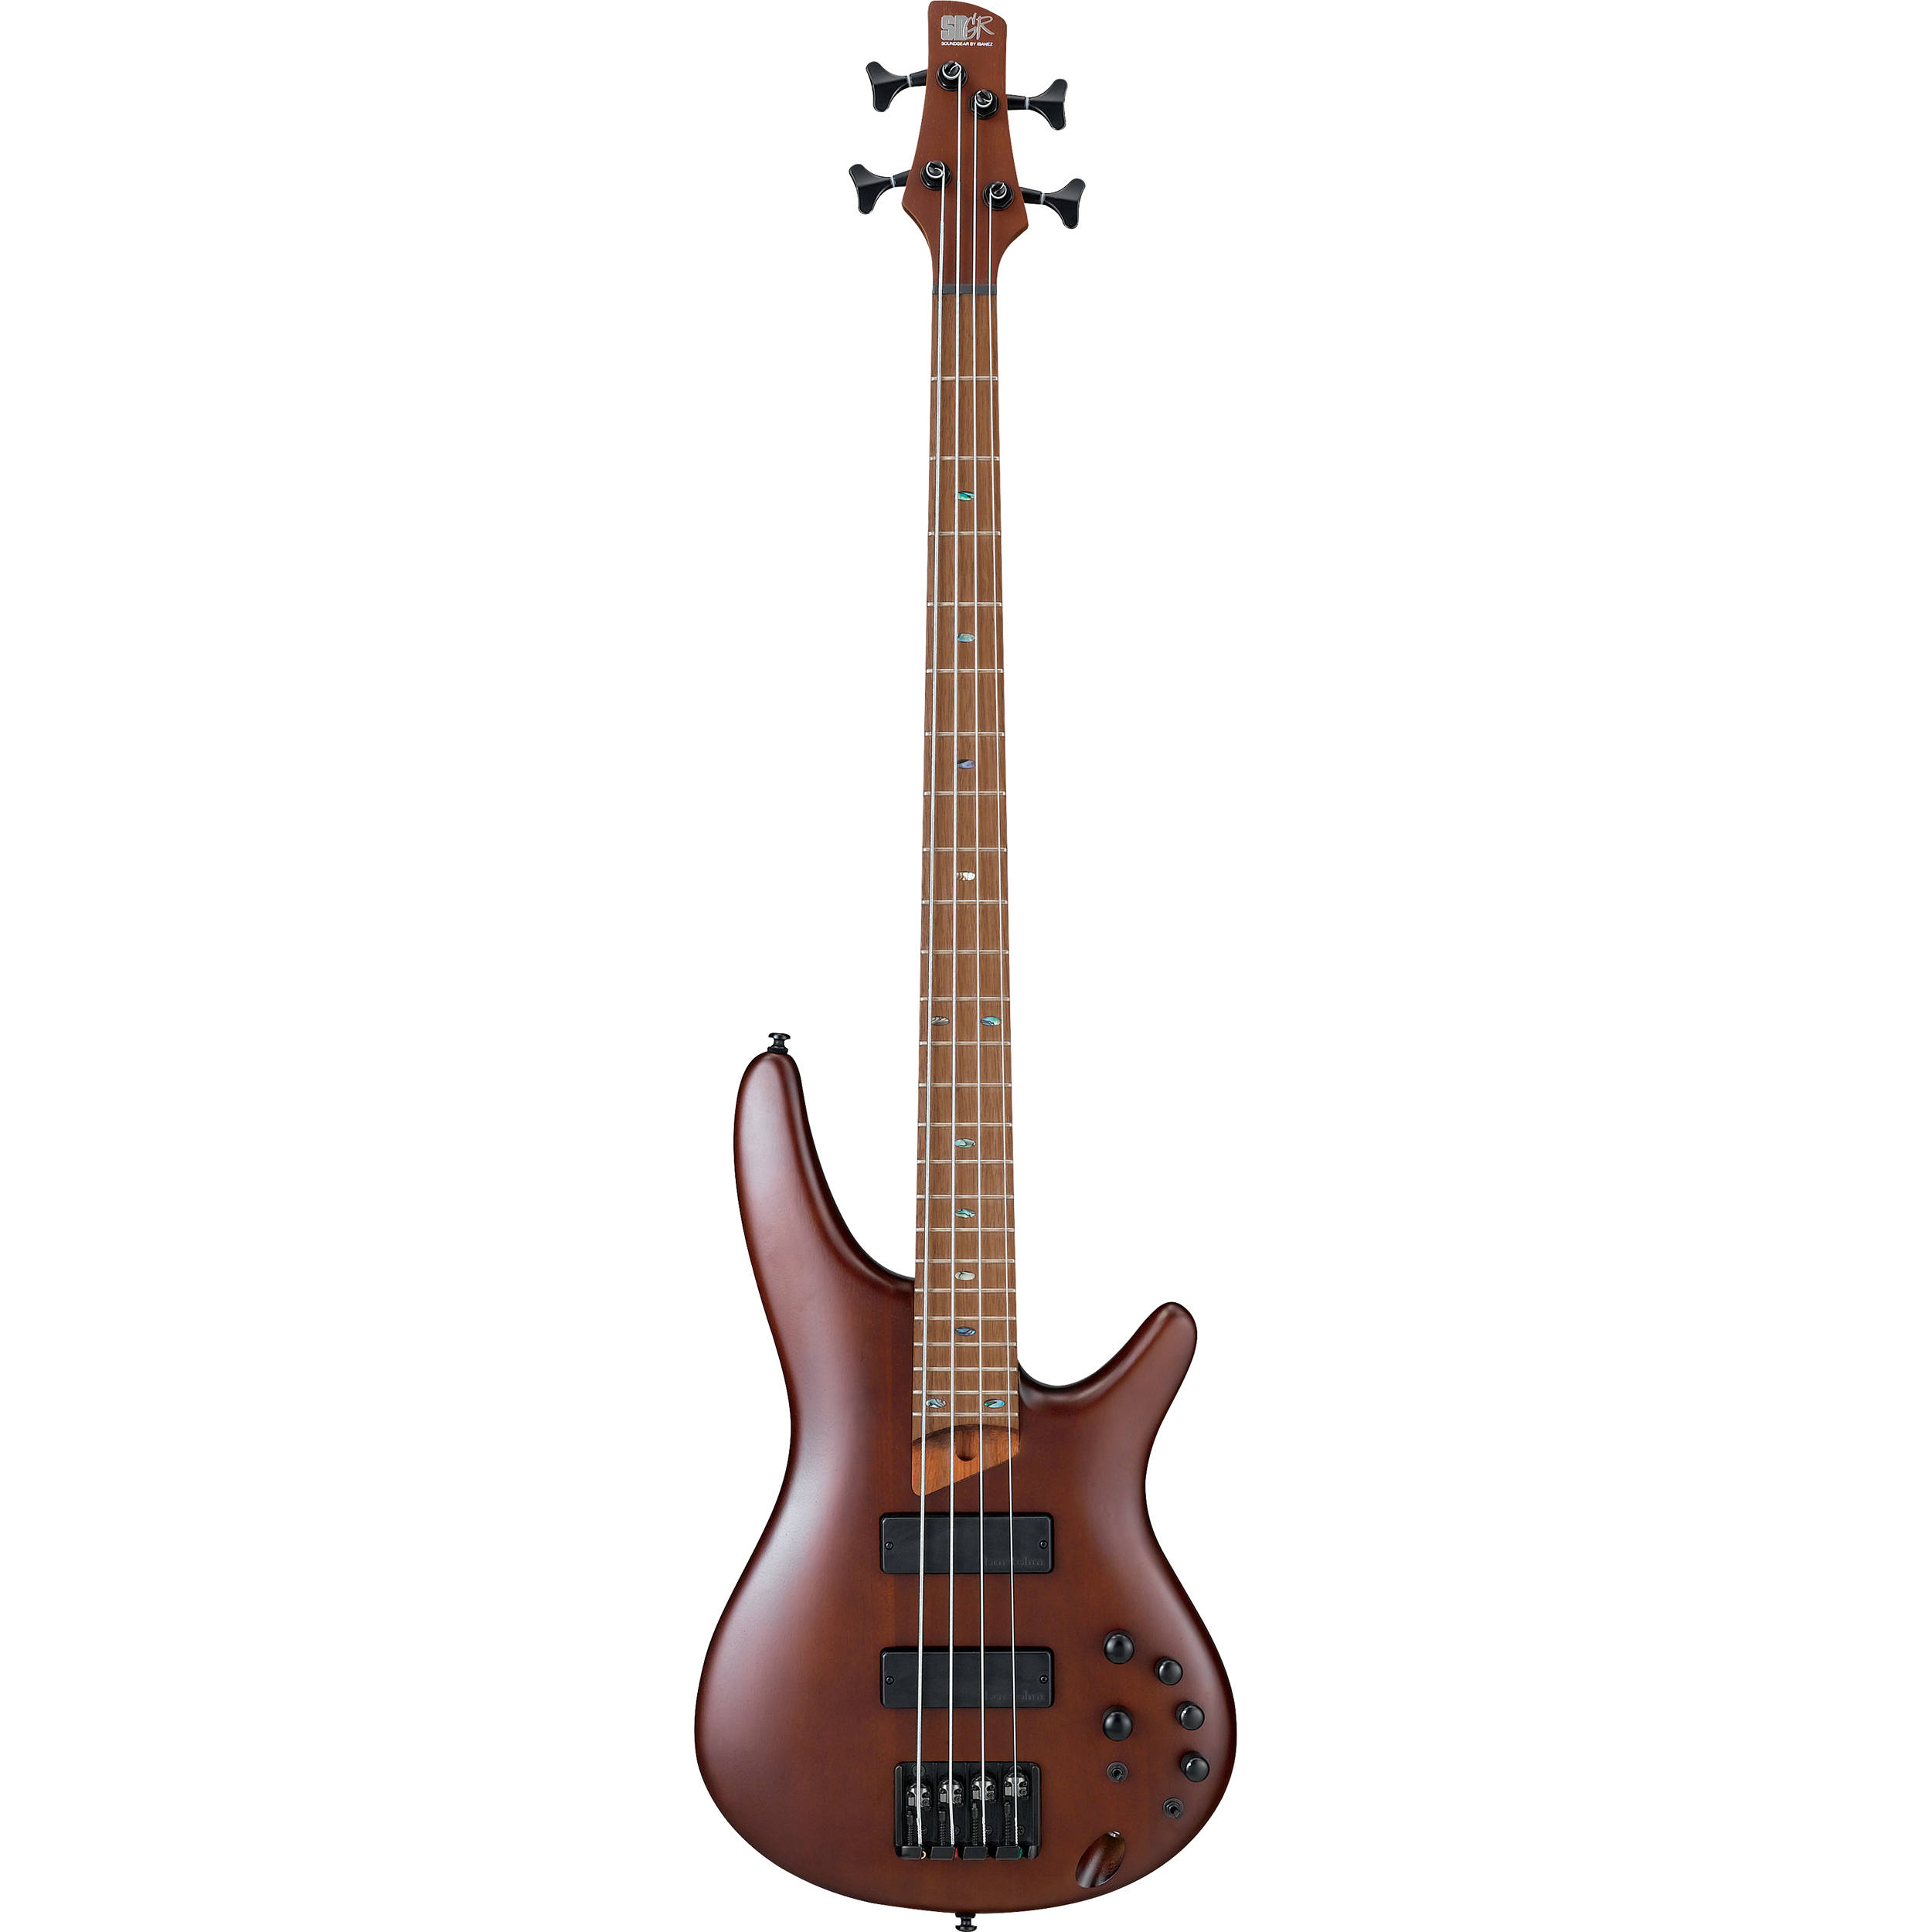 Ibanez SR500EBM Ibanez SR500E Bass Guitar for sale